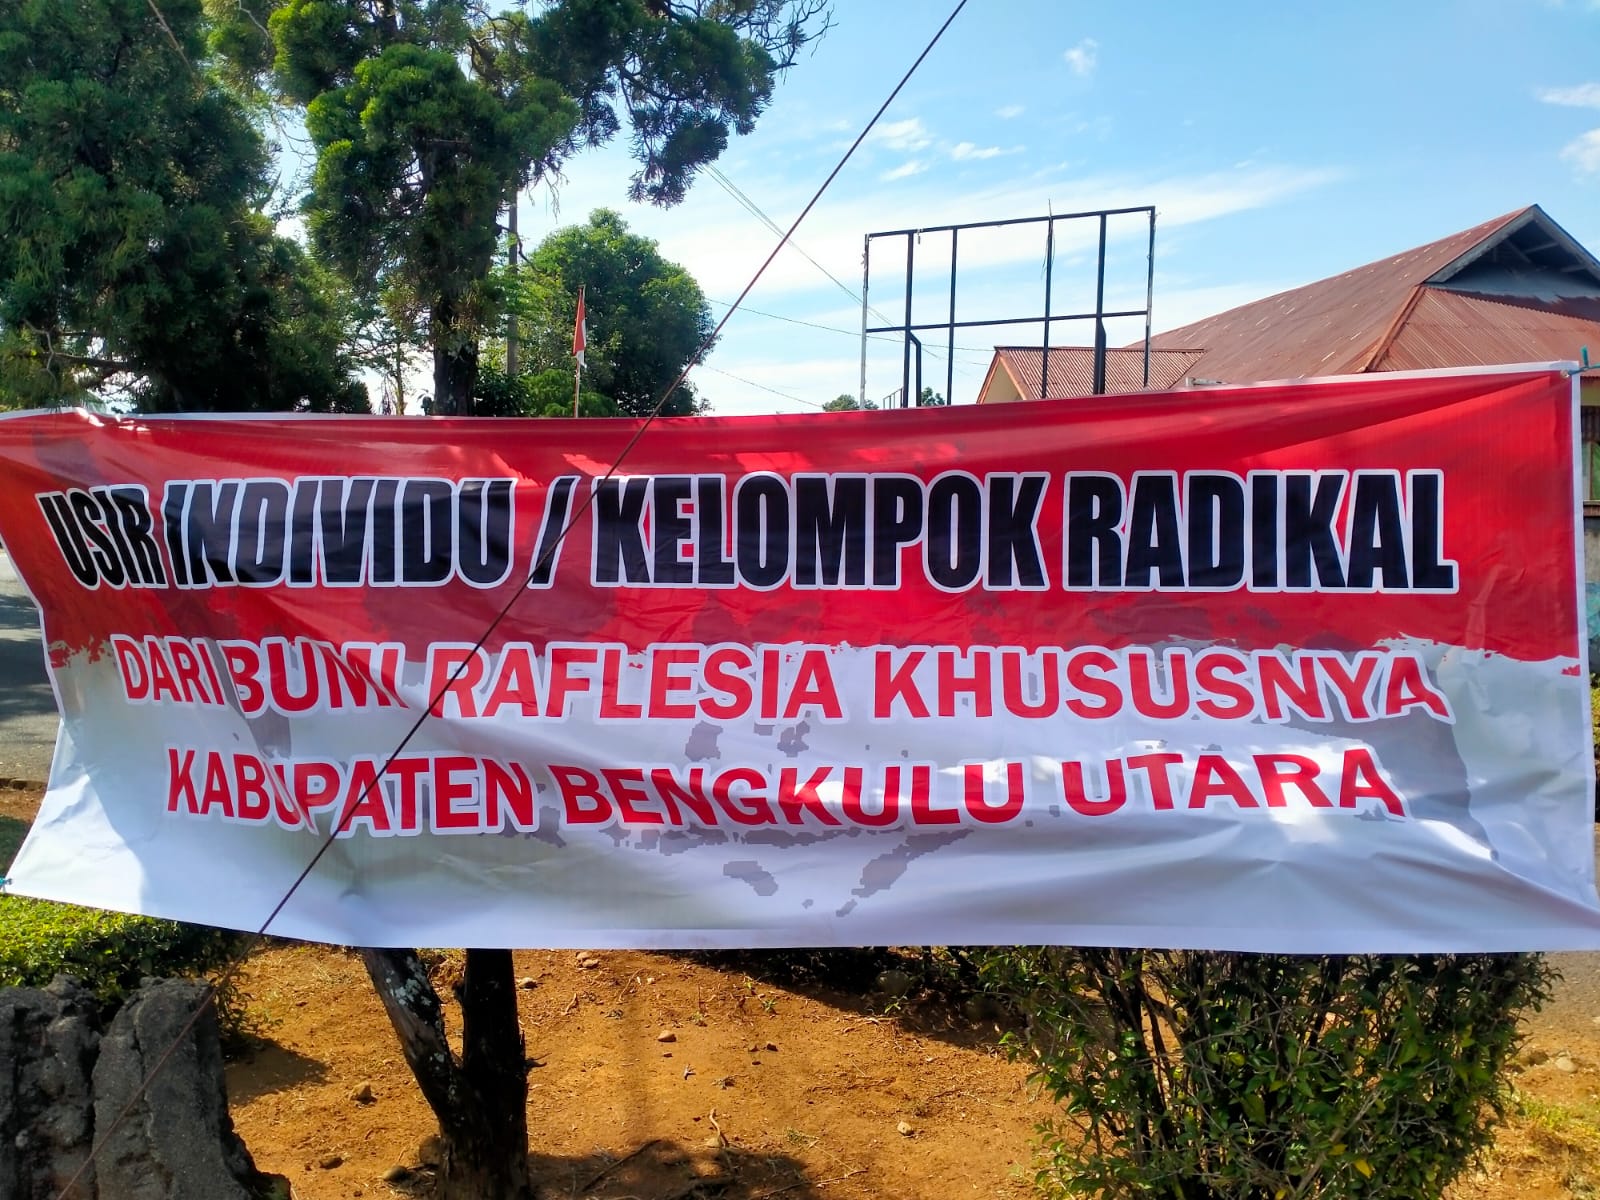 Spanduk 'Usir Kelompok Radikal' Terpasang di Bengkulu Utara, Siapa yang Radikal?